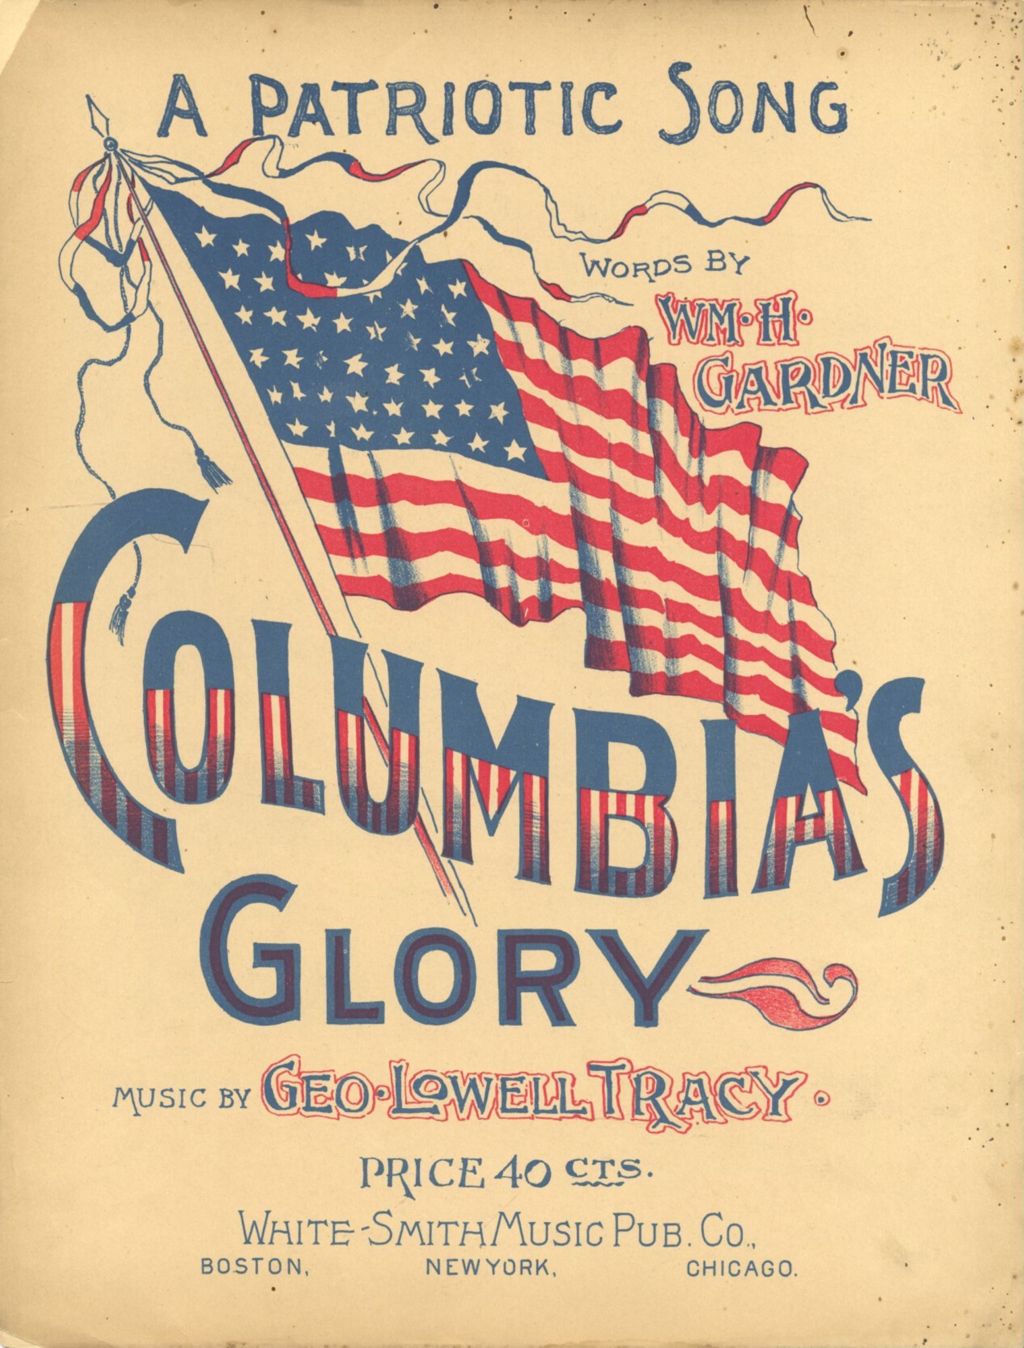 Miniature of Columbia's Glory